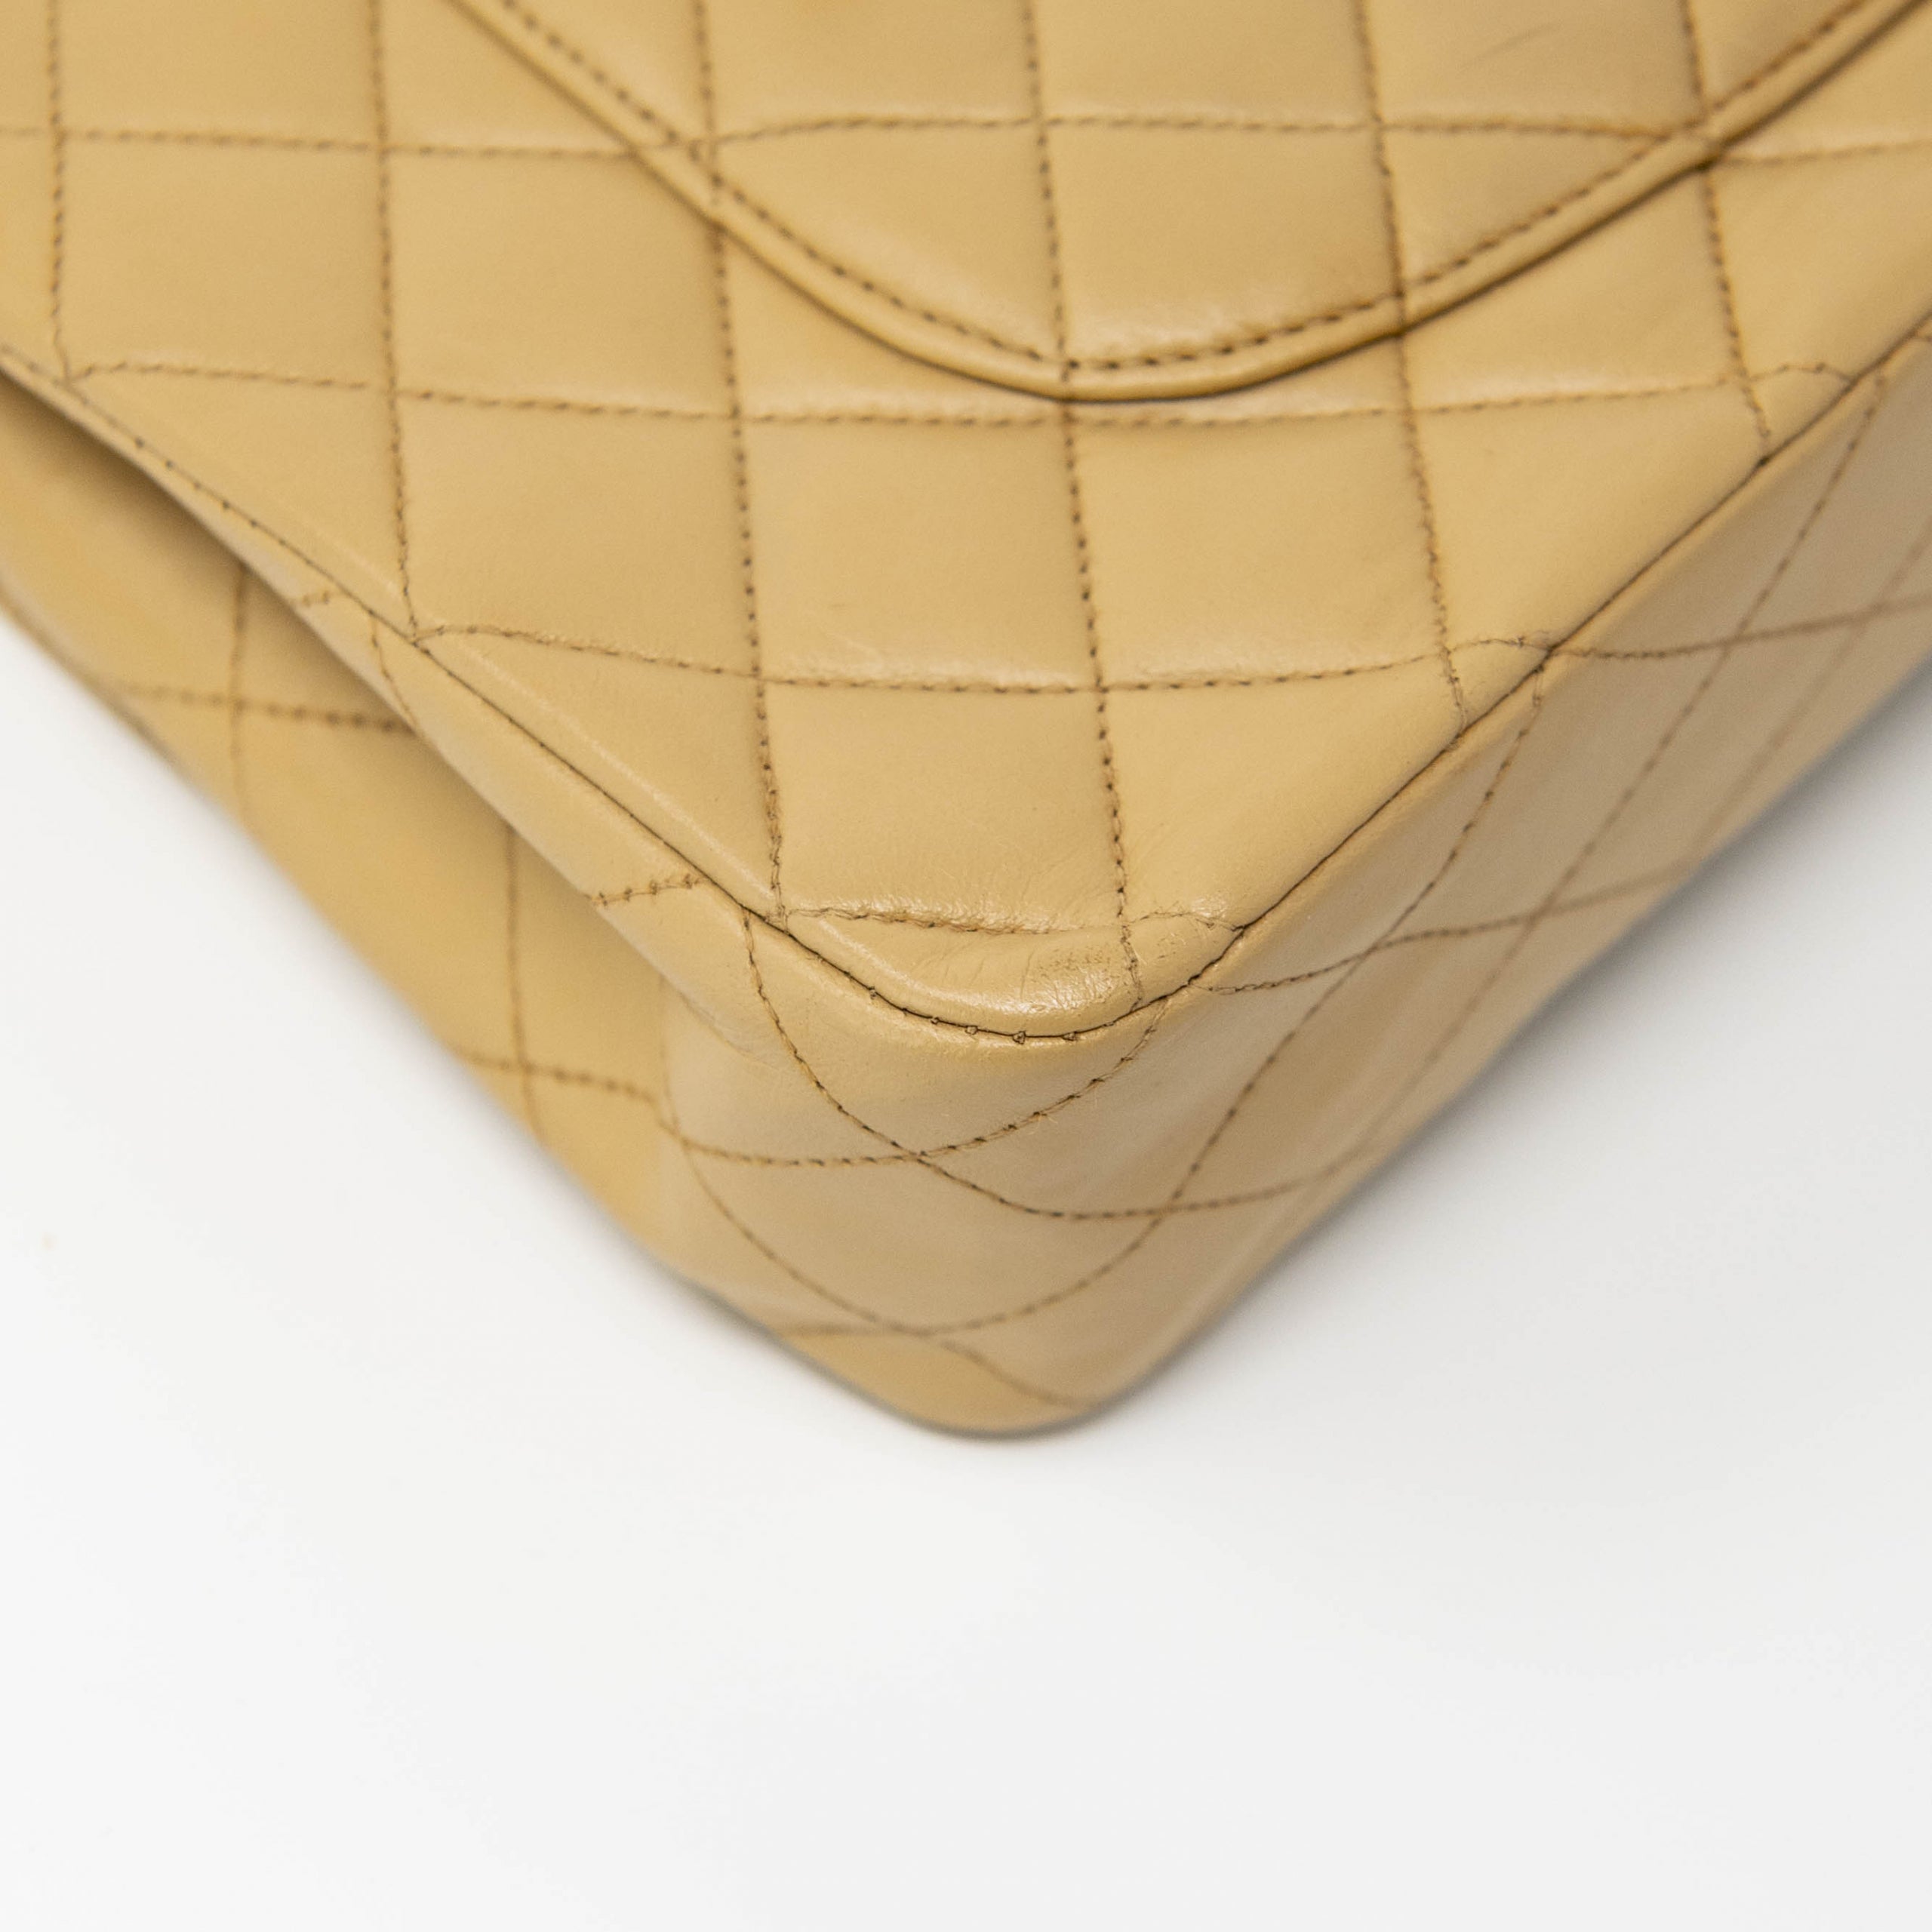 Chanel Beige Medium Vintage Classic Flap